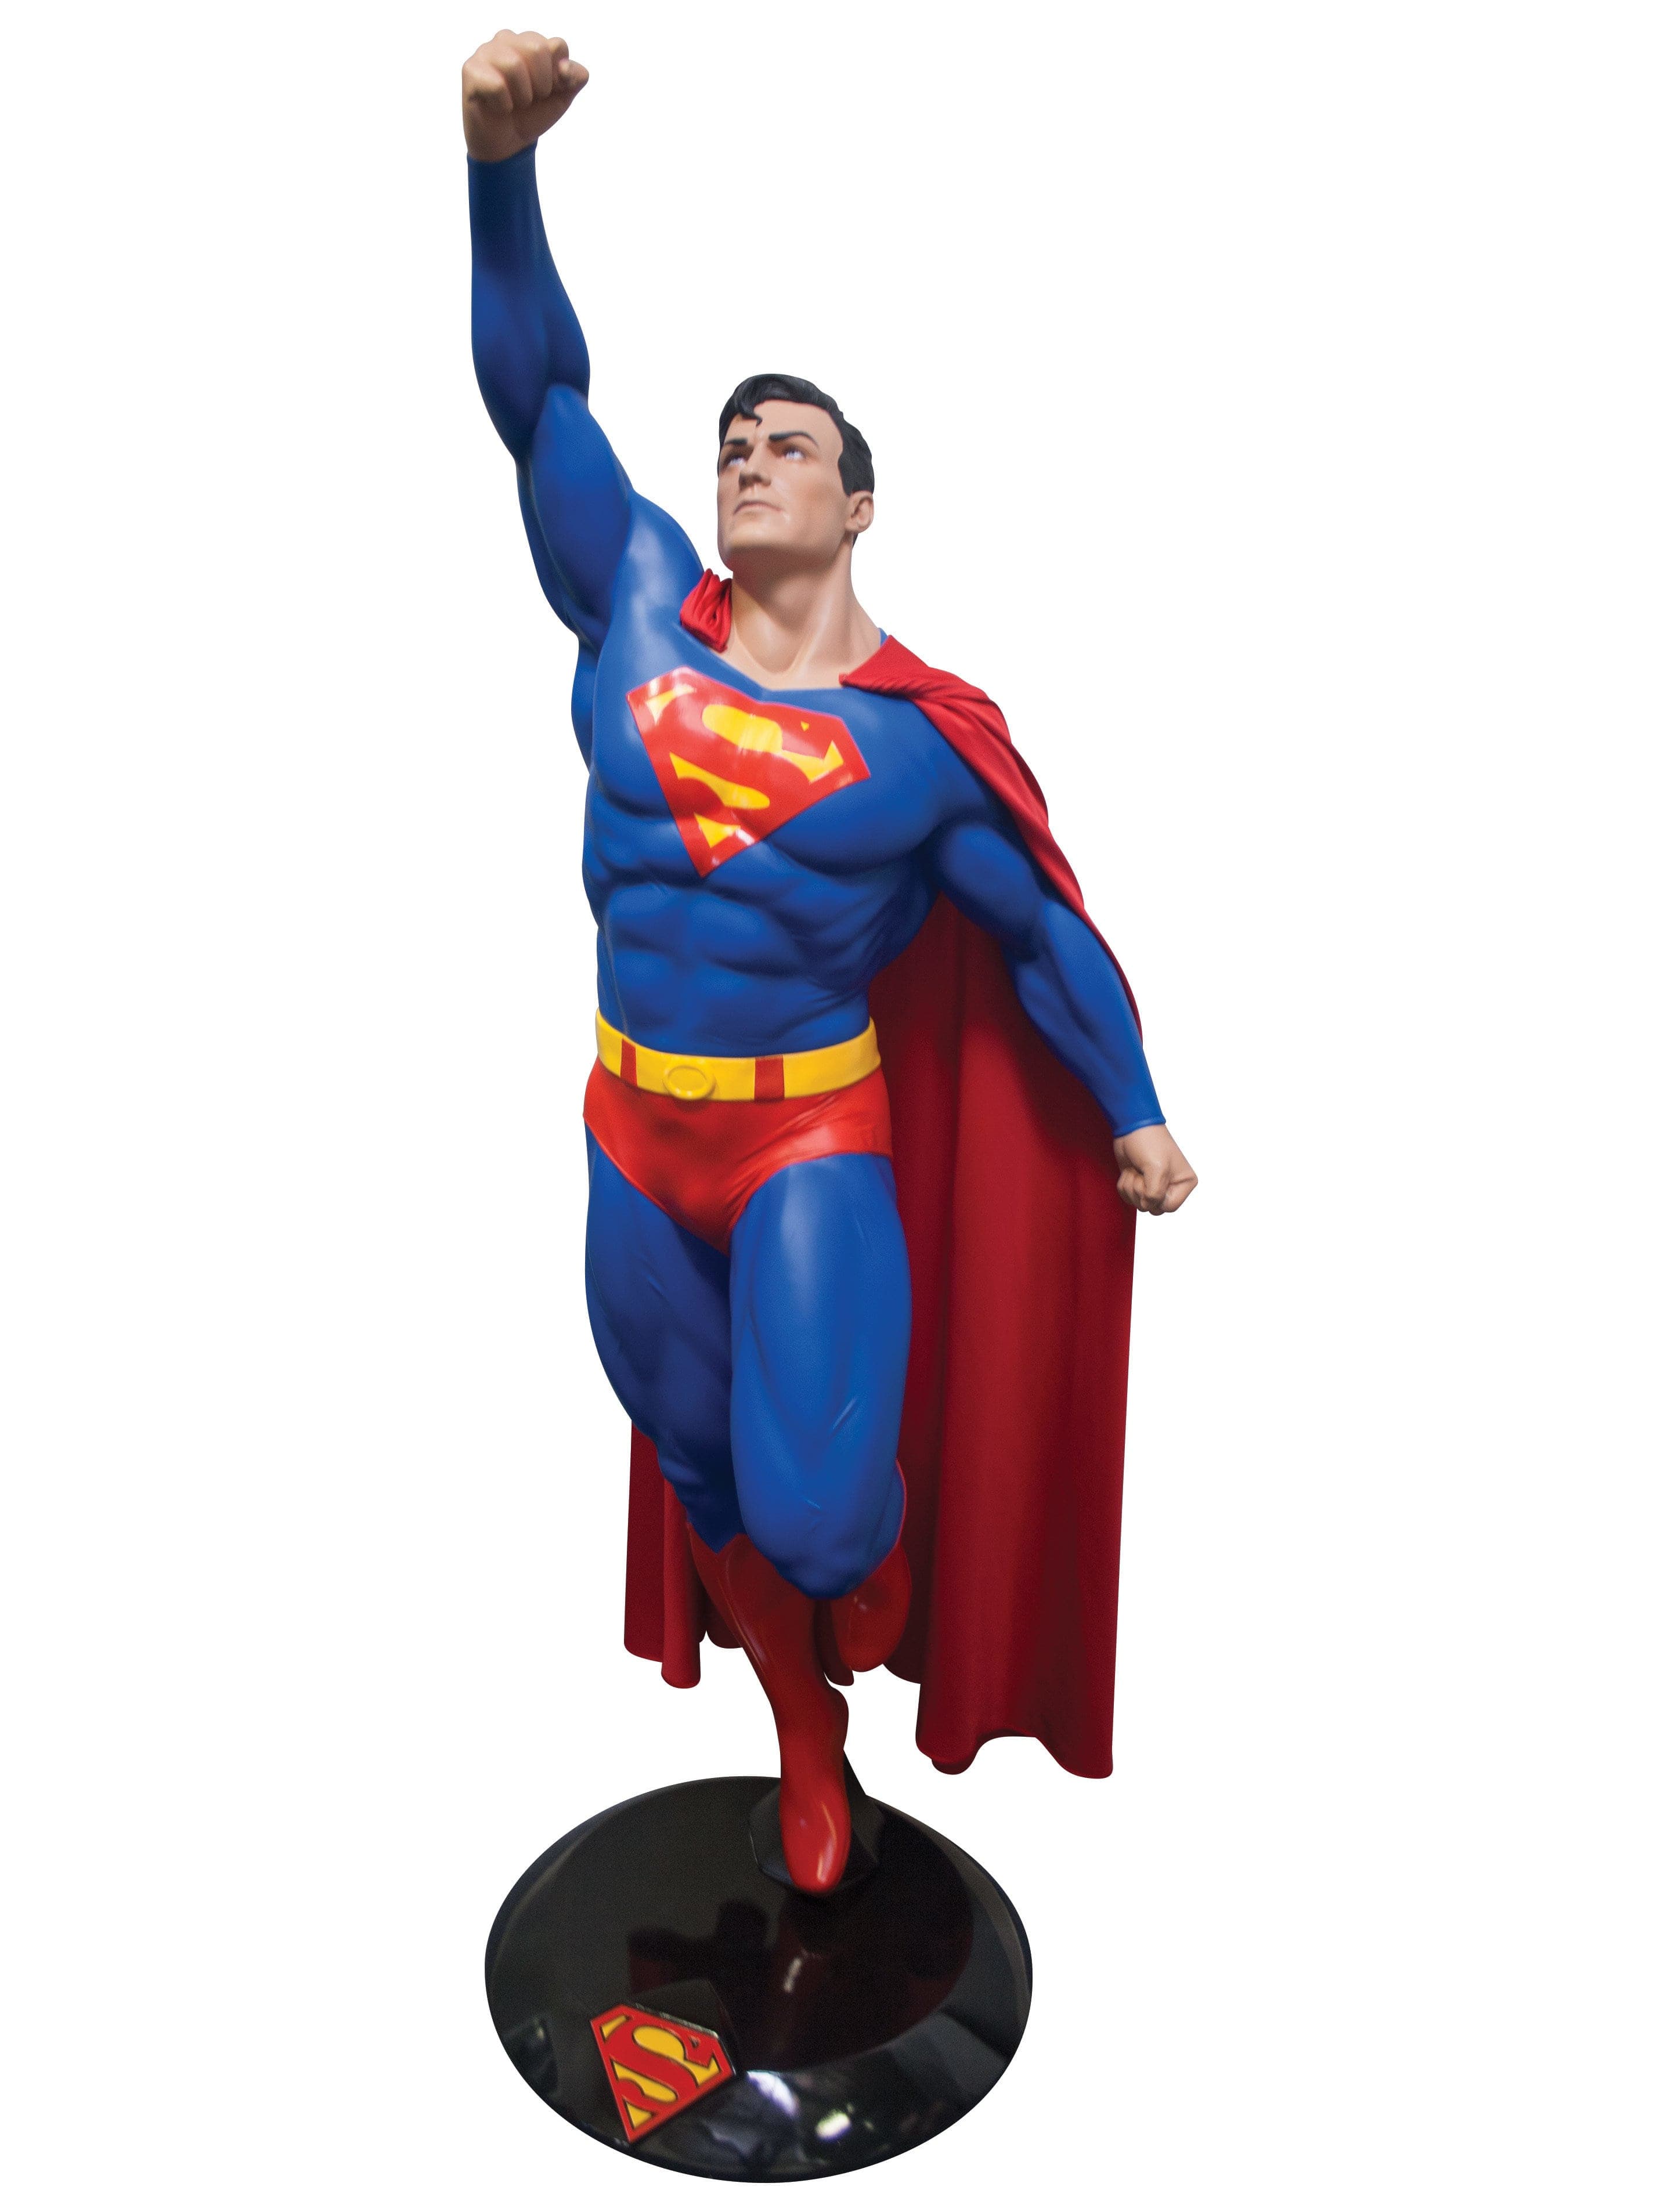 Superman Fiberglass Statue - costumes.com